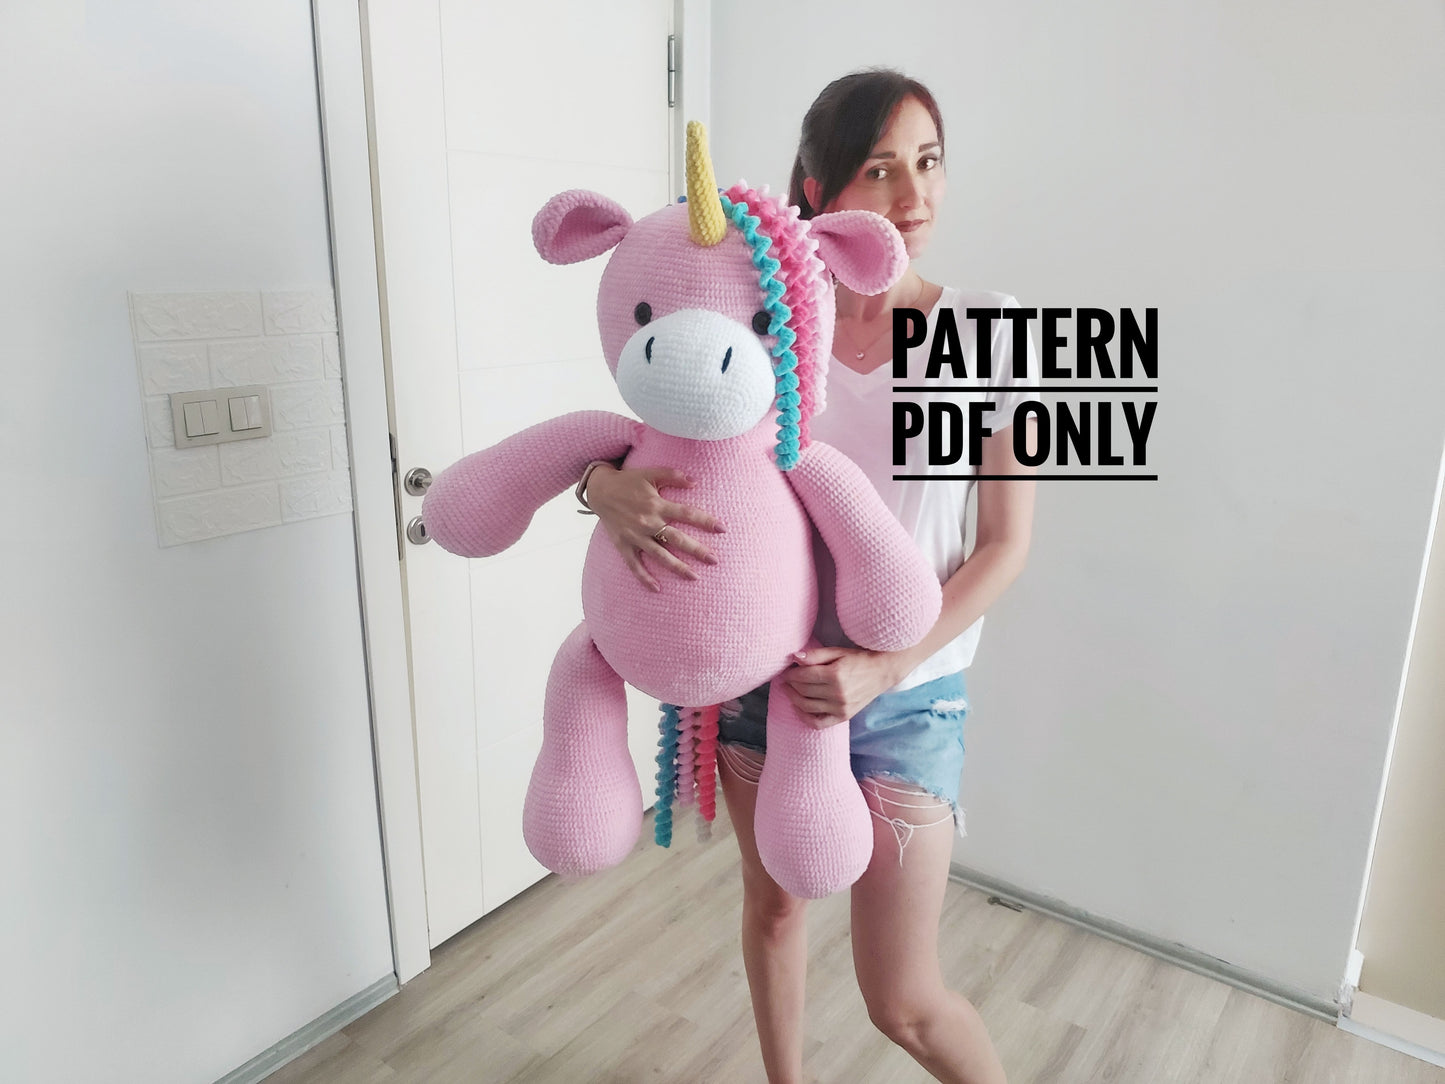 Crochet big pink house - unicorn pillow pattern, big horse pattern, Amigurumi patterns, Crochet unicorn tutorial